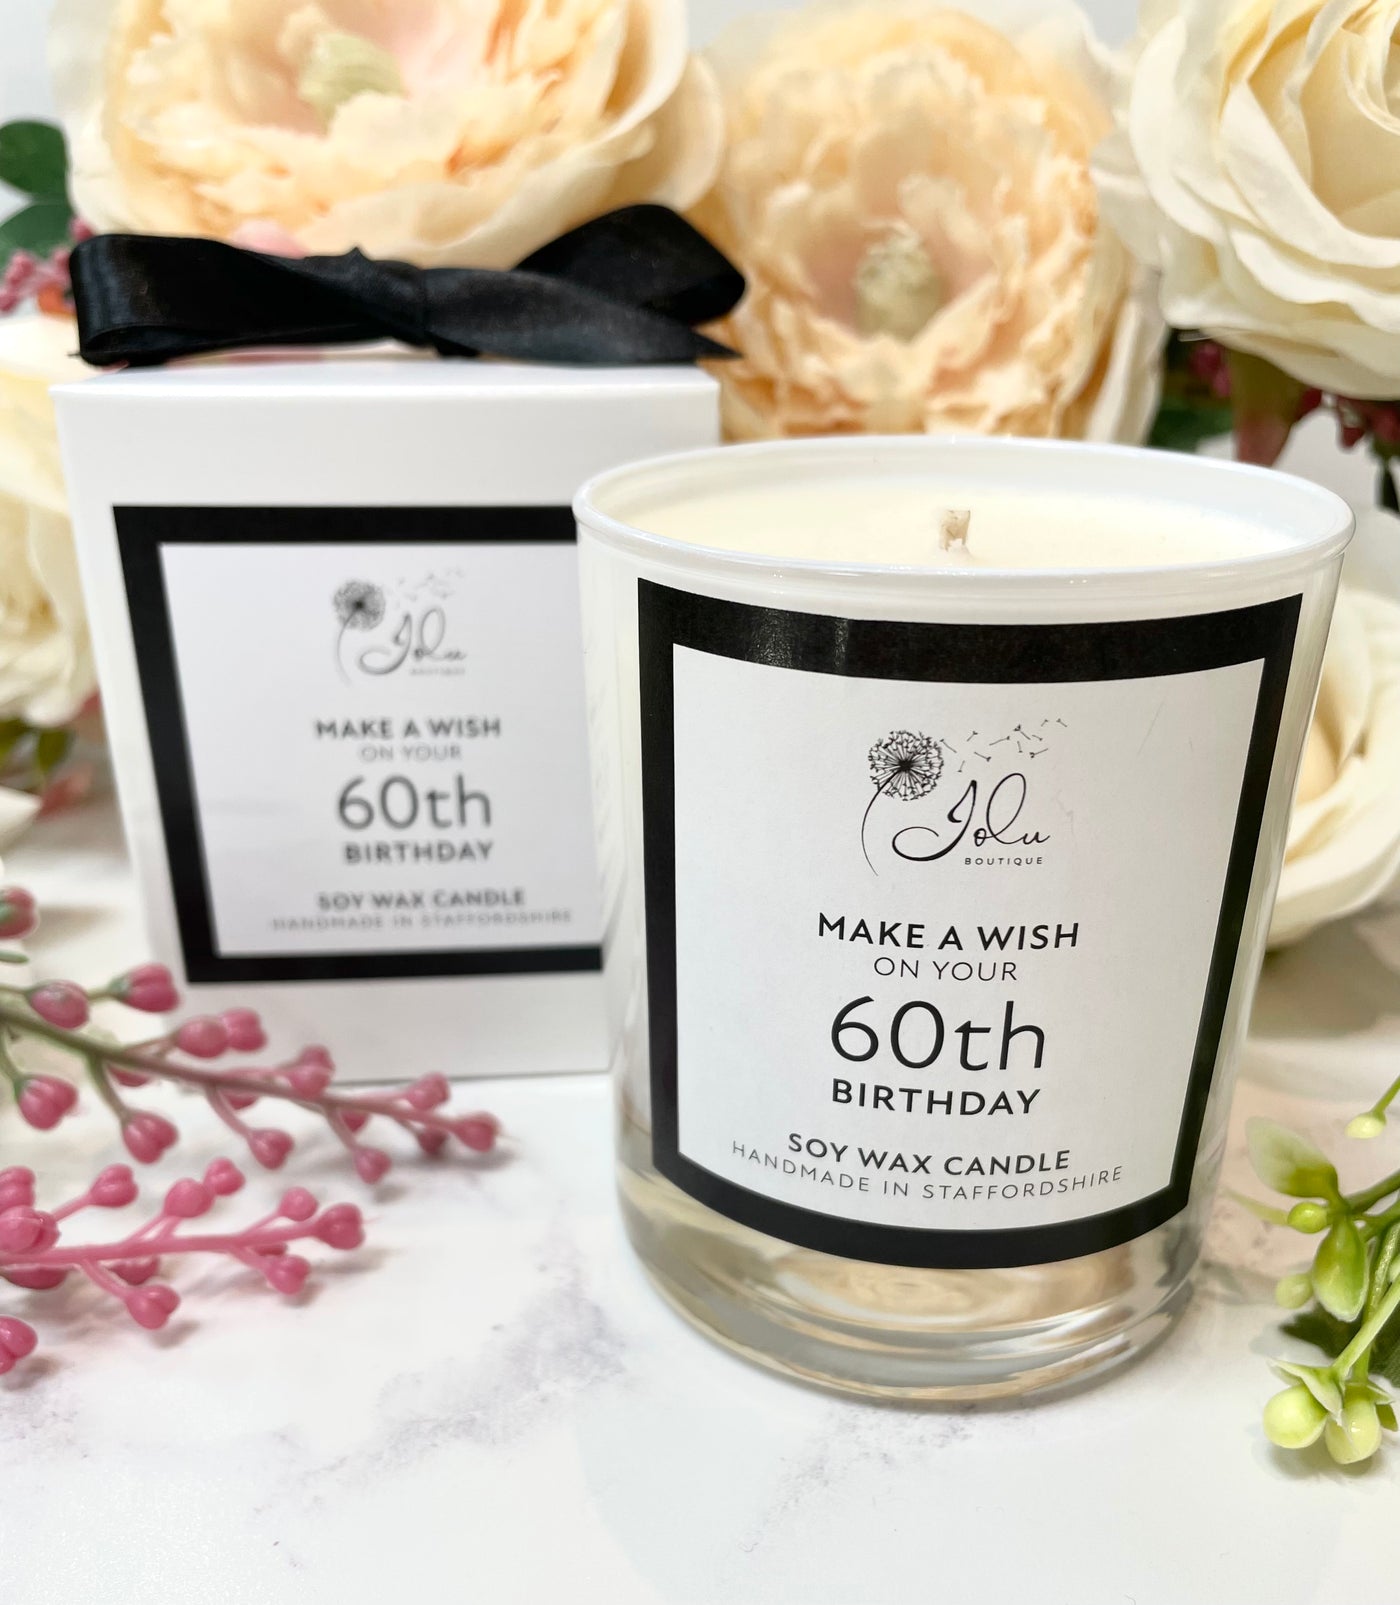 Jolu Boutique Make a Wish Sentiment Candle - 60th Birthday